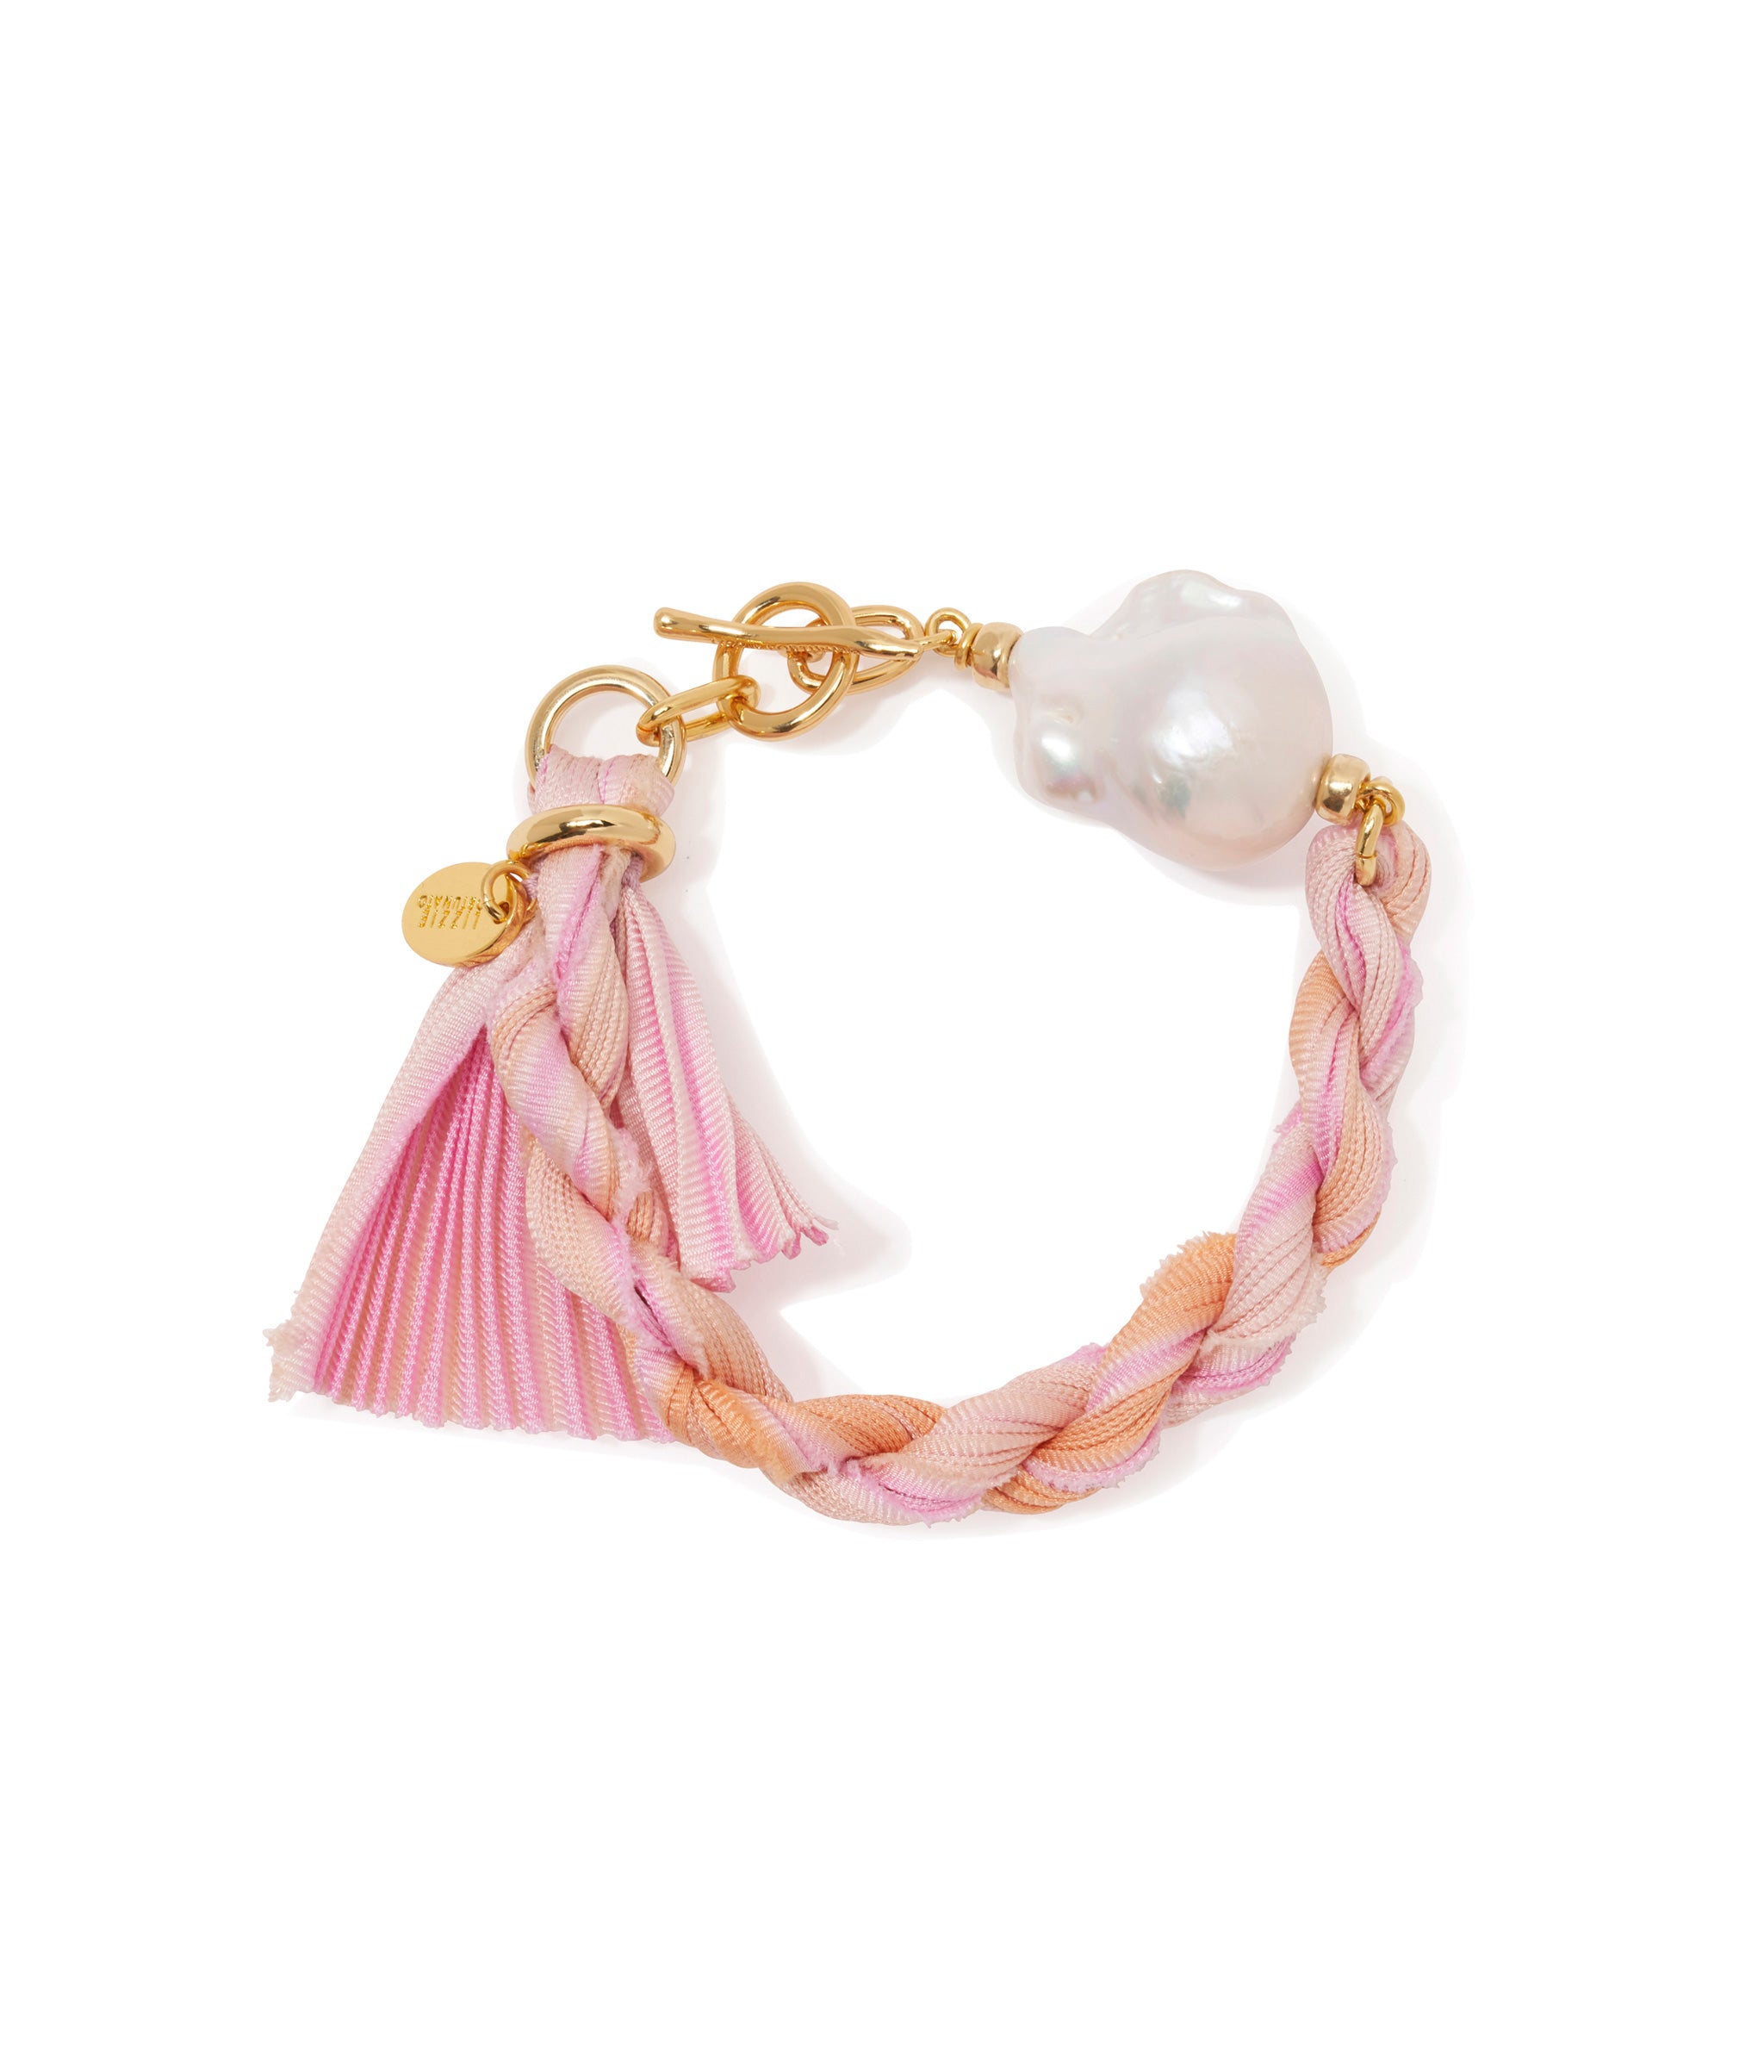 Shibori Ribbon Bracelet in Rose. Light pink shibori silk ribbon, large freshwater pearl and gold-plated toggle closure.